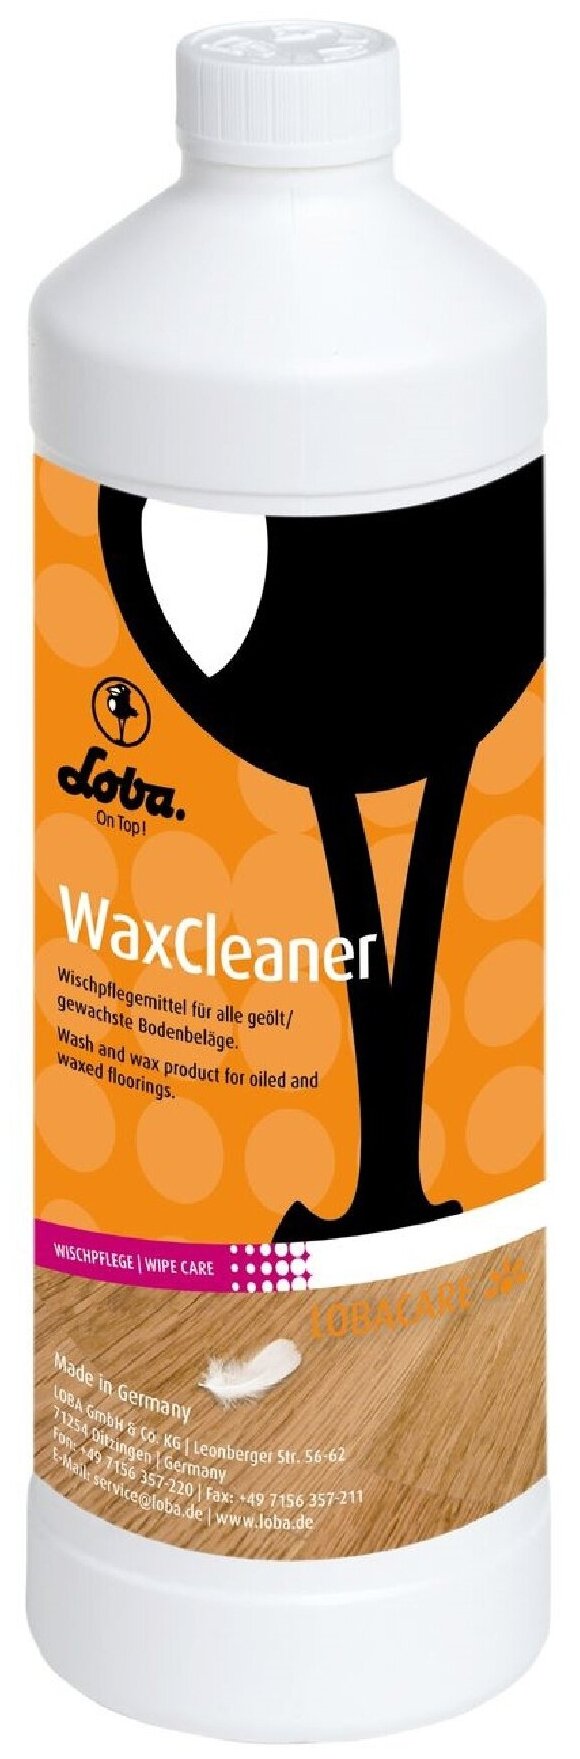 Loba Wax Cleaner, для масляных покрытий, матовый, 1.00л., средство по уходу